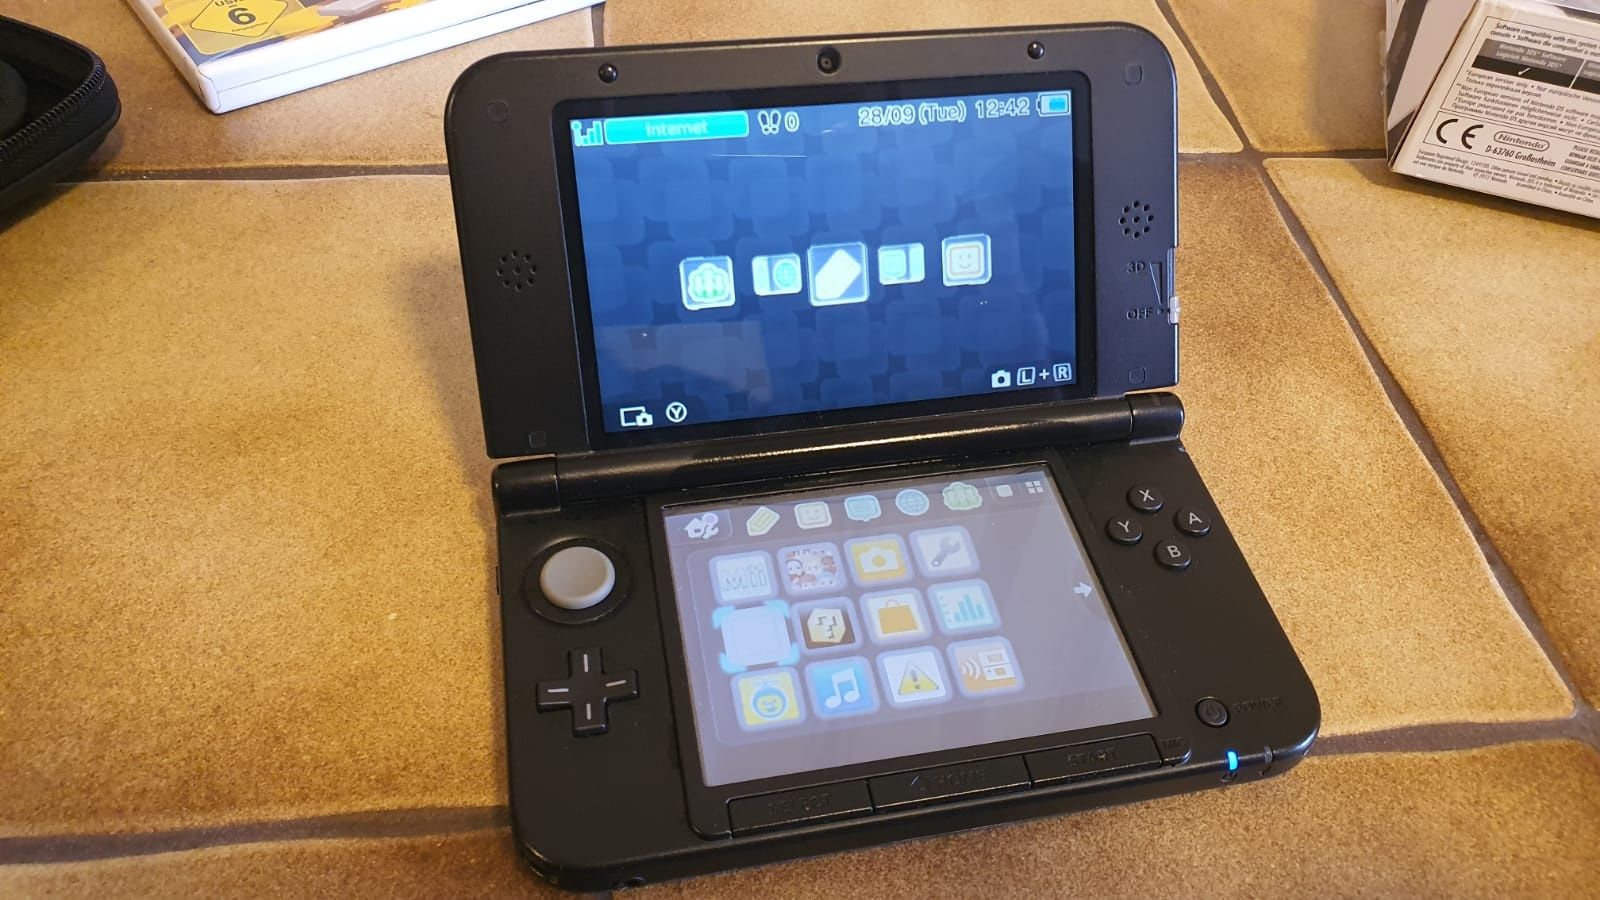 Vand Nintendo 3DS XL + Jocuri si Accesori